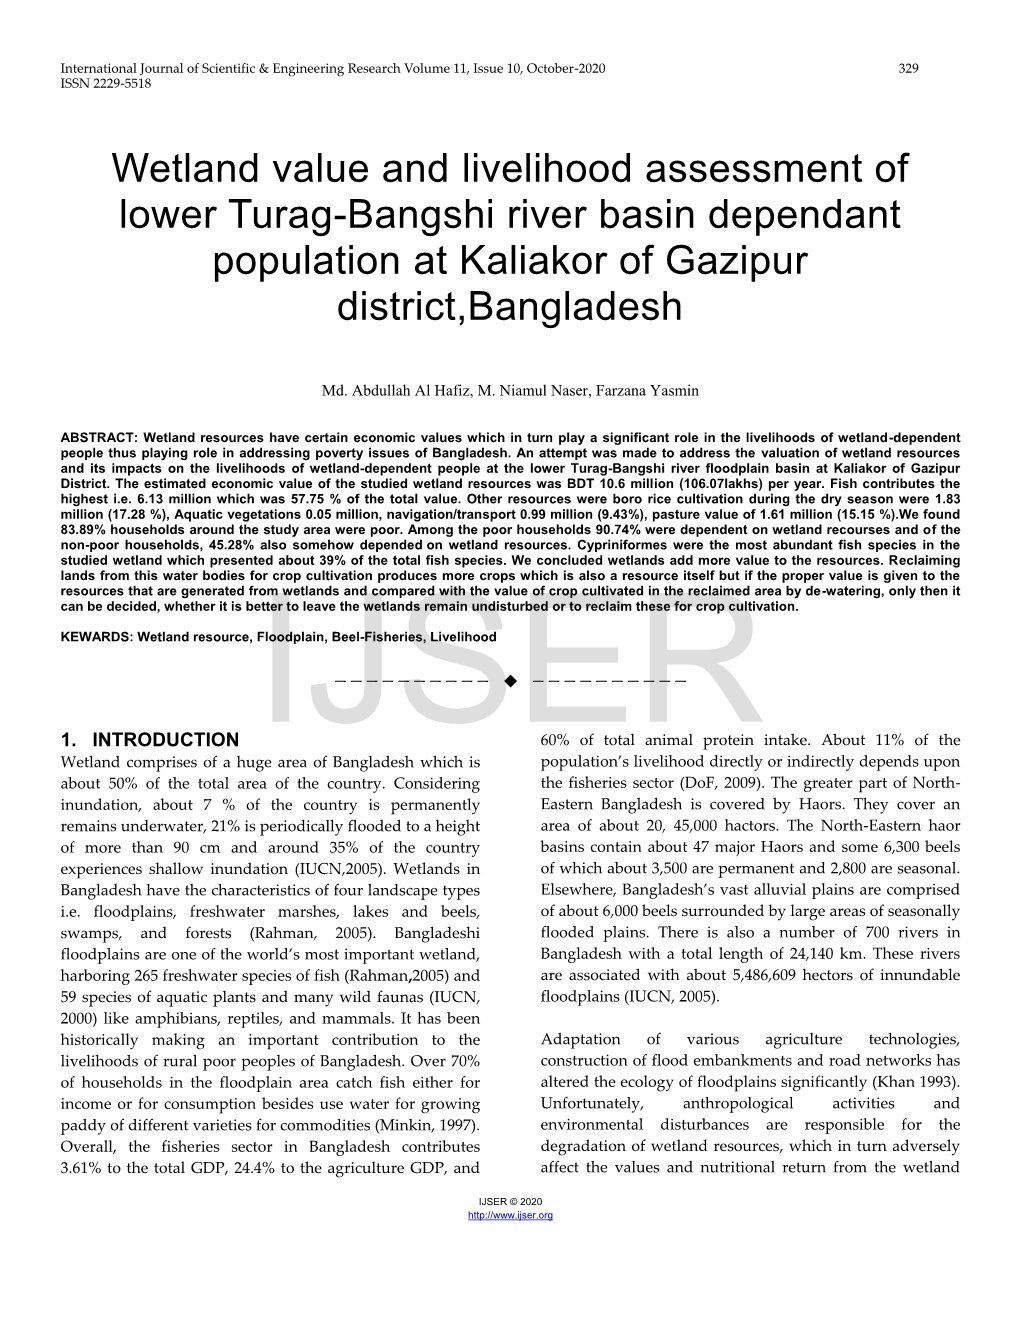 Wetland Value and Livelihood Assessment of Lower Turag-Bangshi River Basin Dependant Population at Kaliakor of Gazipur District,Bangladesh